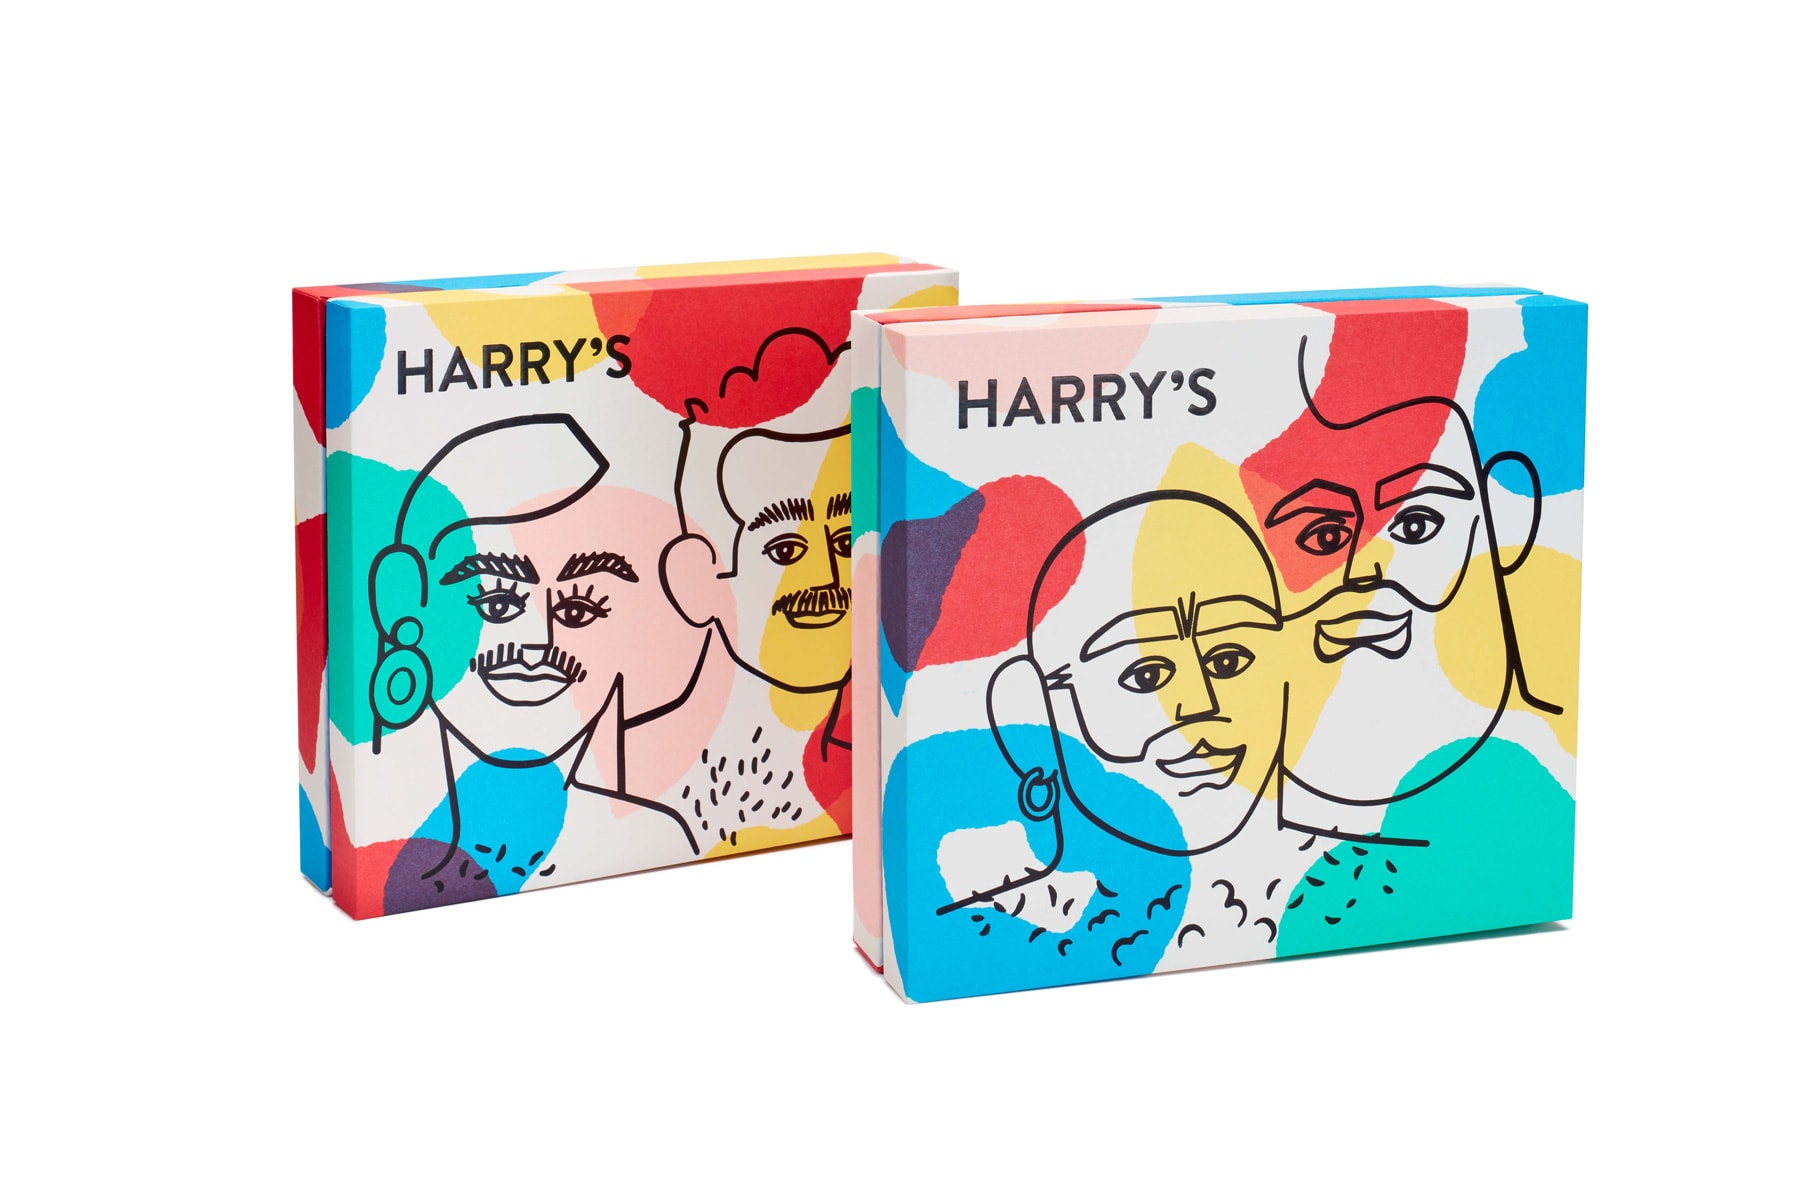 Harry's Pride Month Special Edition Shaving Kit grooming skincare beauty health josé Roda shaving gel lgbqt